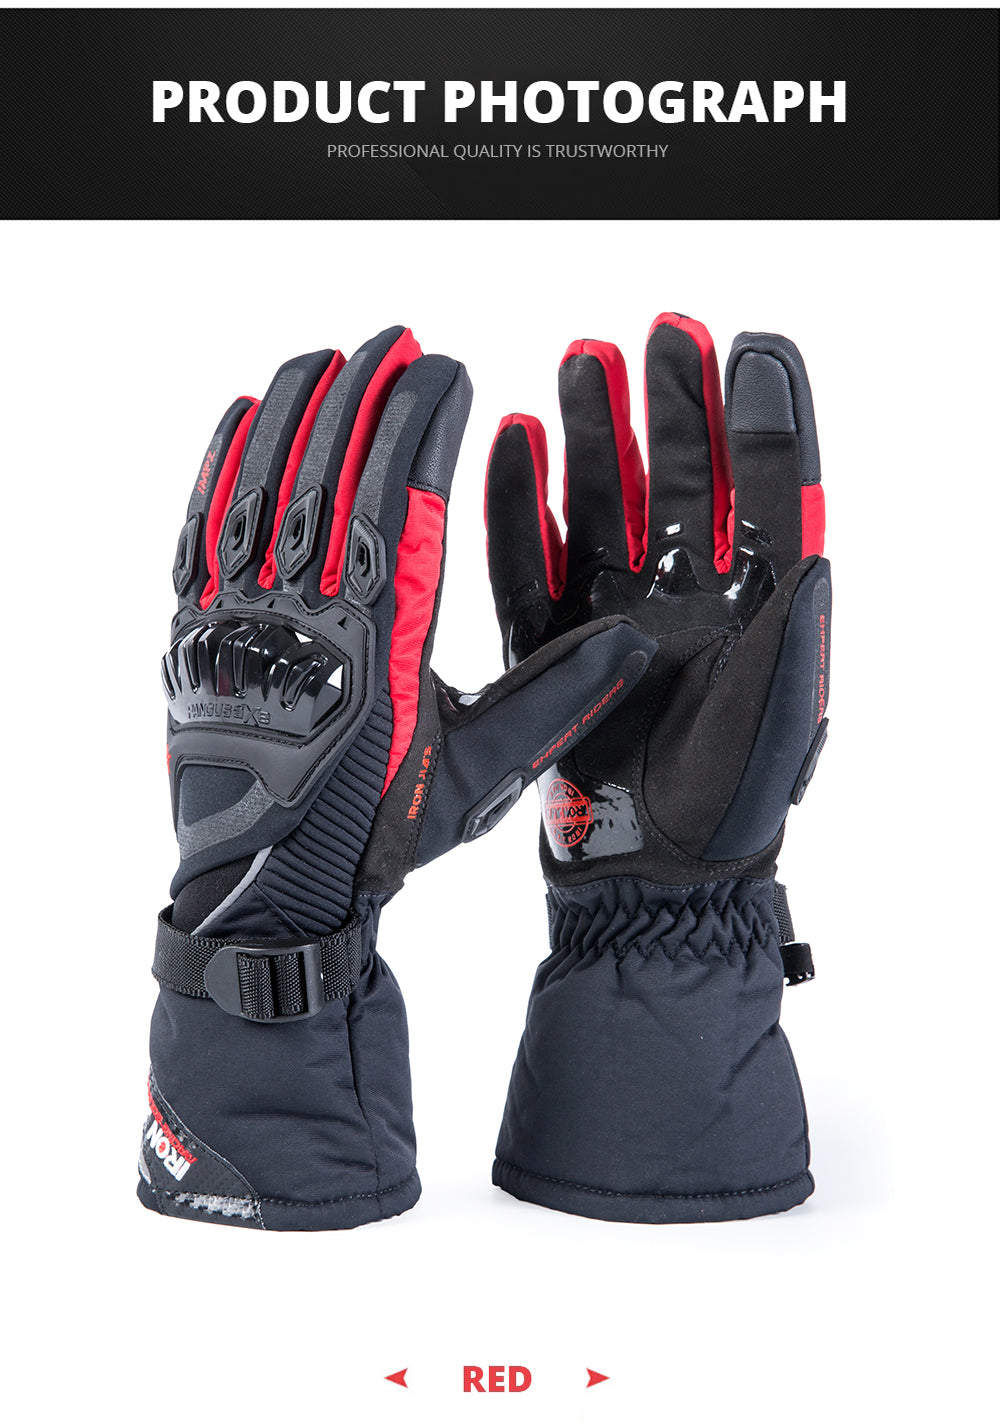 Iron Jia's Winter Motorcycle Gloves impermeabile Antivento Touch Screen Moto Gear Gear Motocross Moto Guanti da equitazione